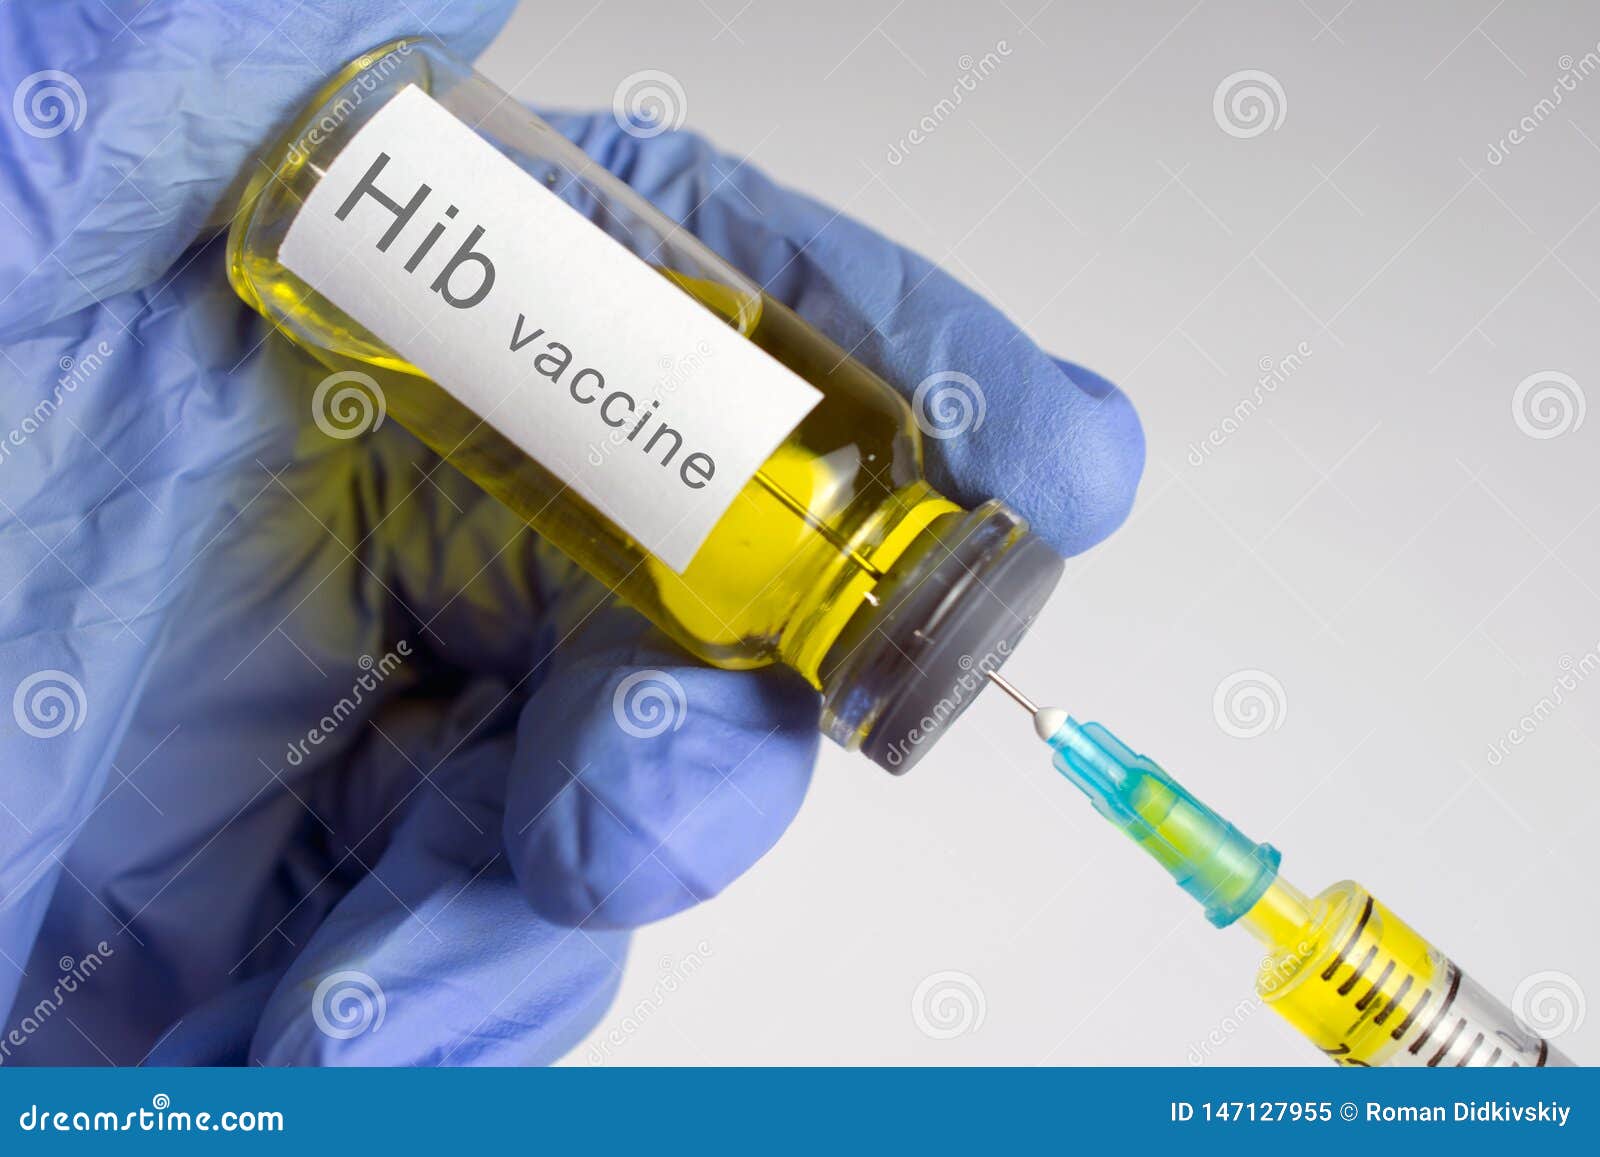 hib vaccine